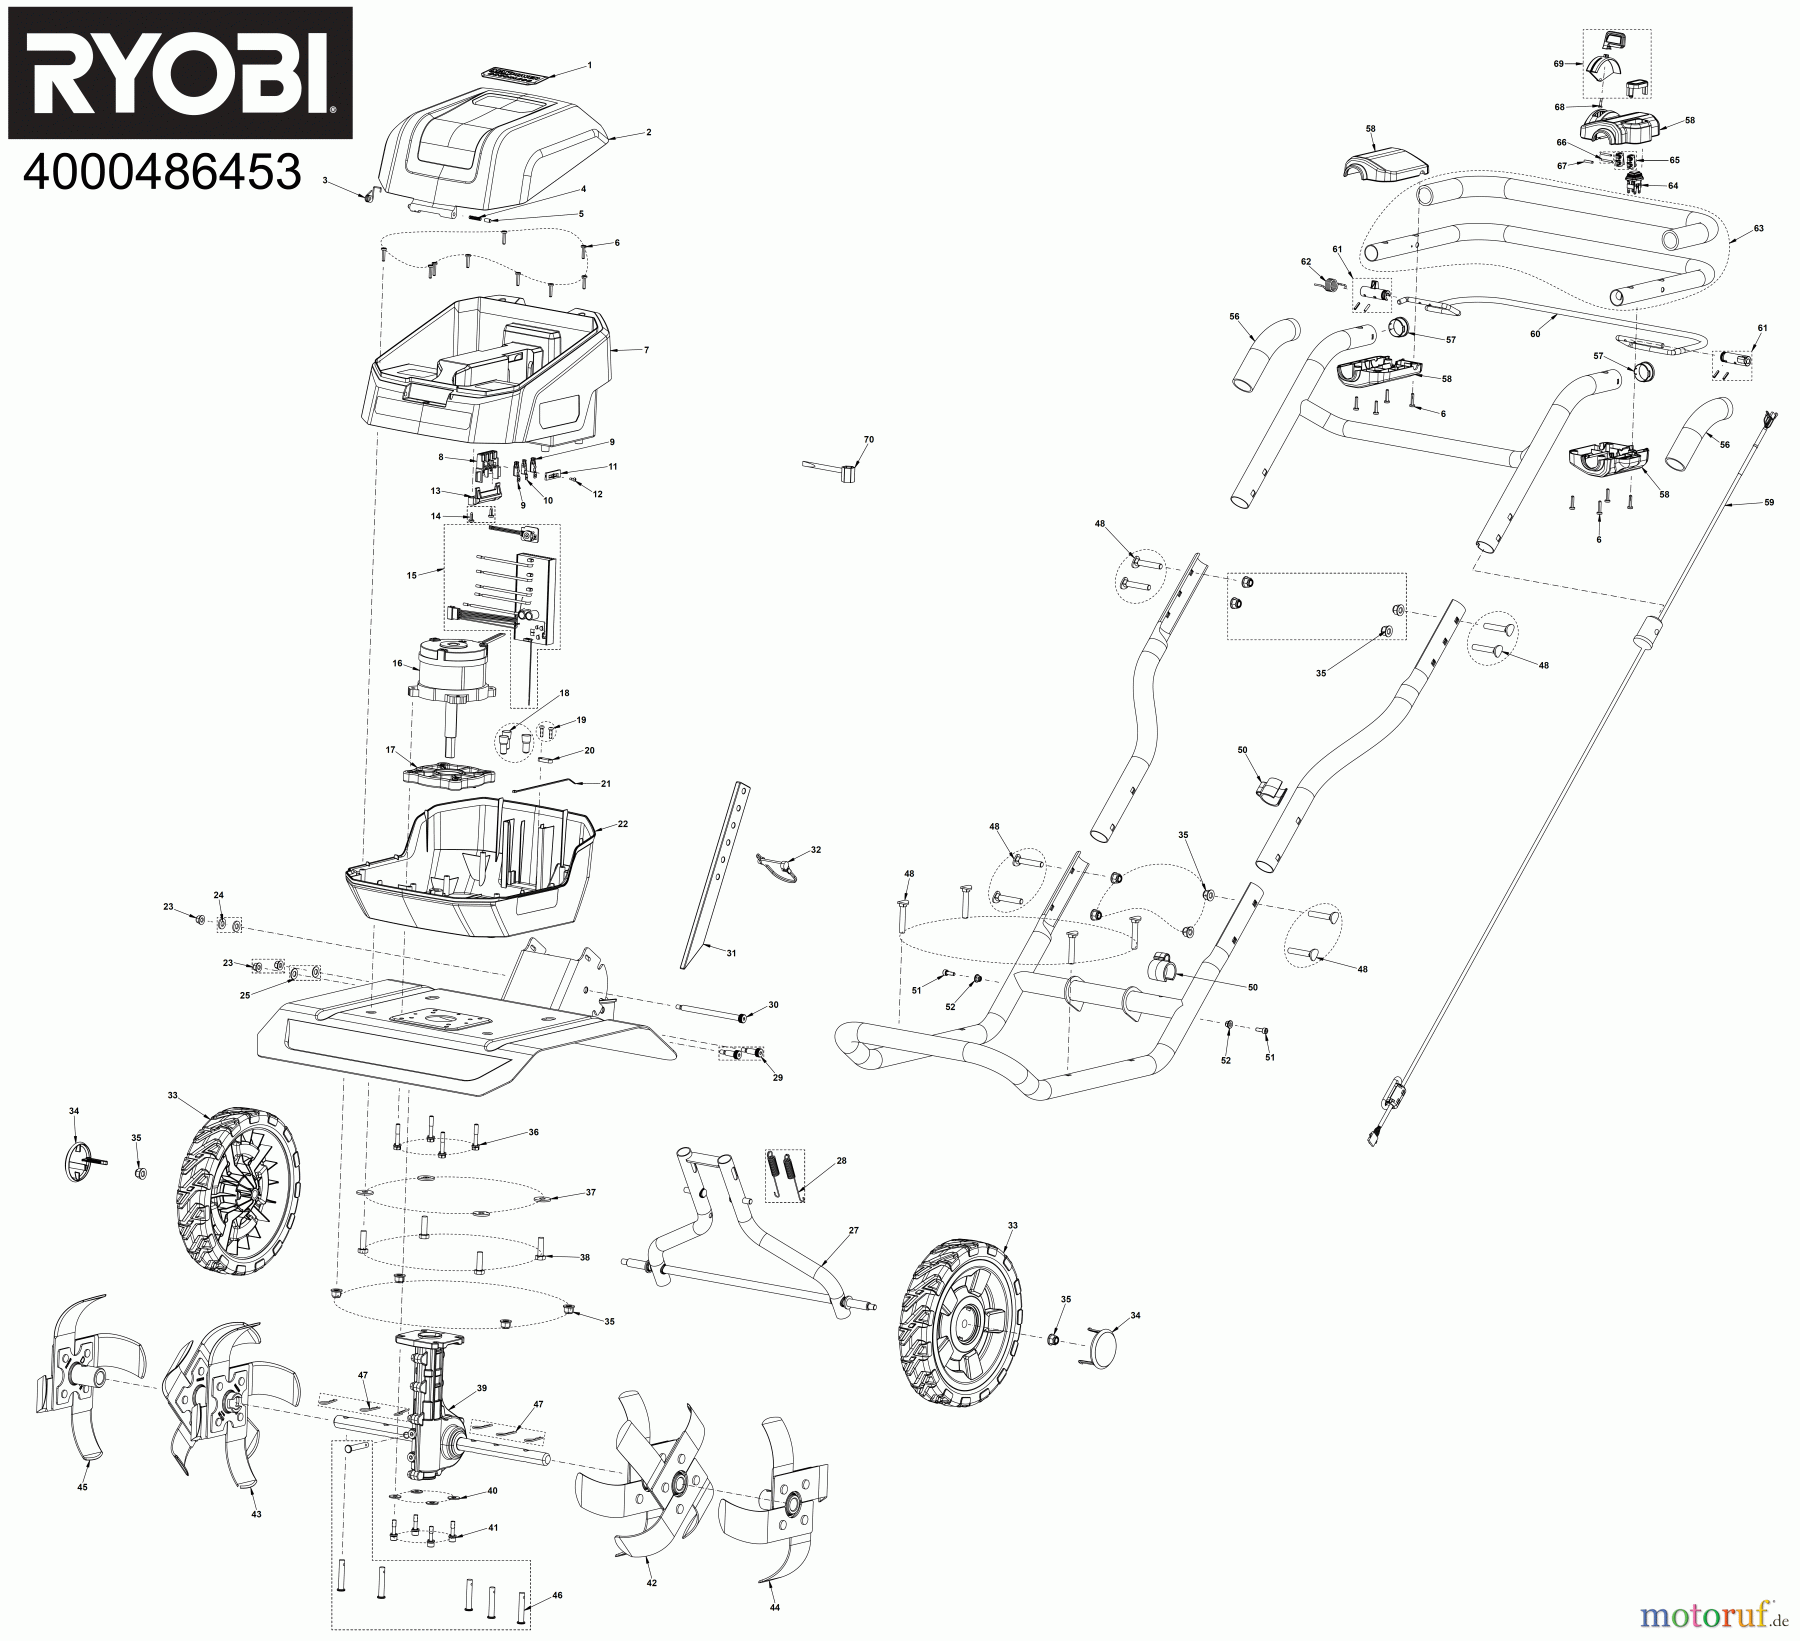  Ryobi Bodenhacken Kultivator RY36CVXA 36 V MAX POWER Brushless Akku-Bodenfräse, Arbeitstiefe 20 cm Seite 1